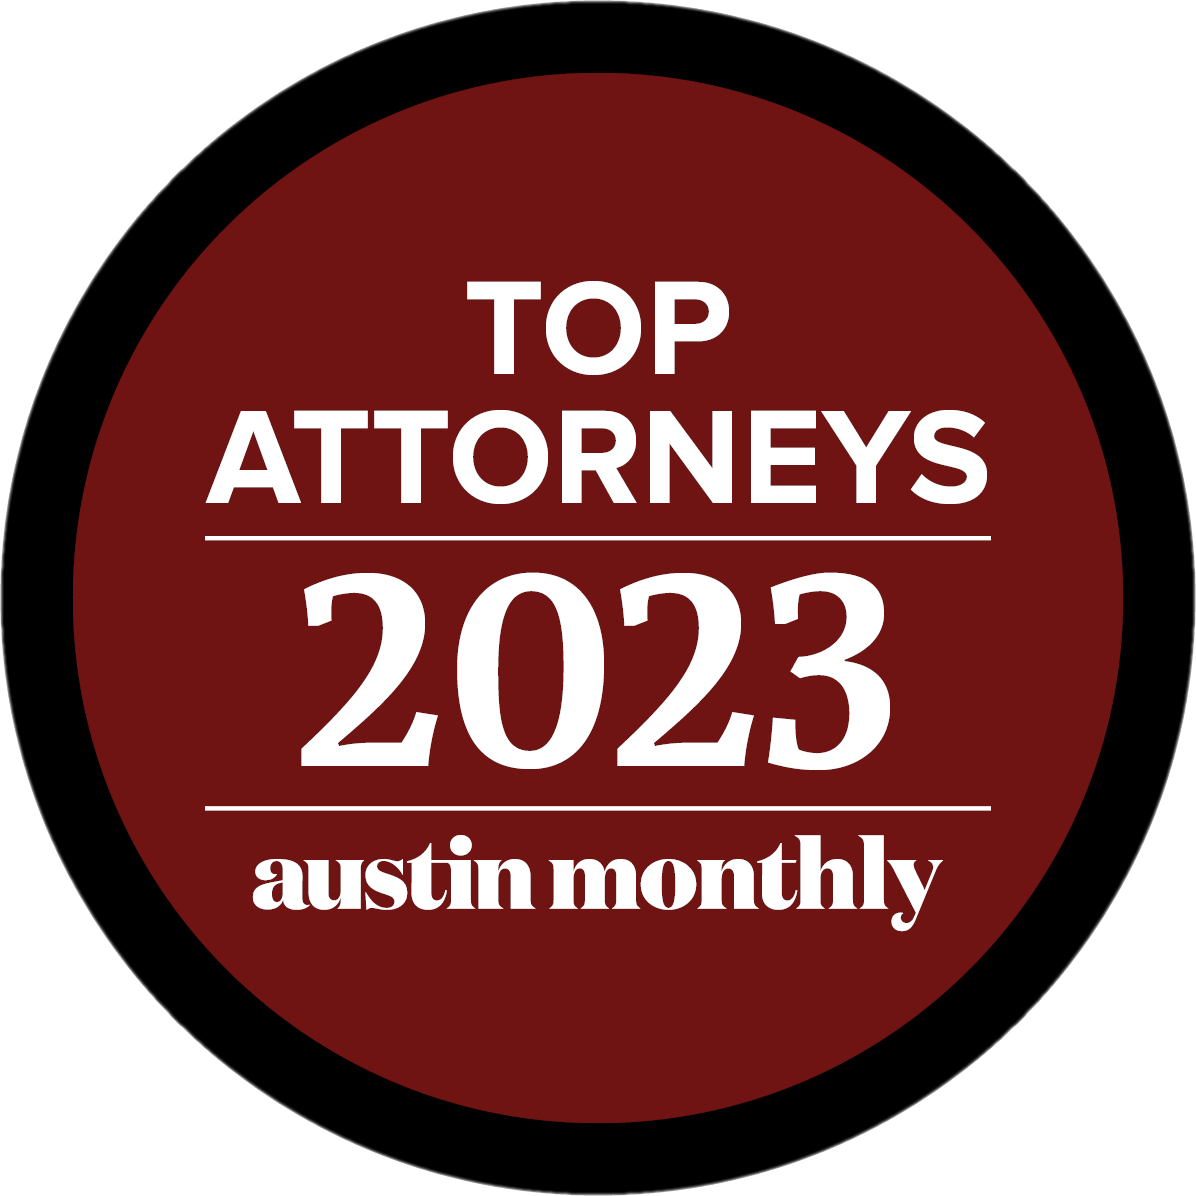 Top Attorneys 2023